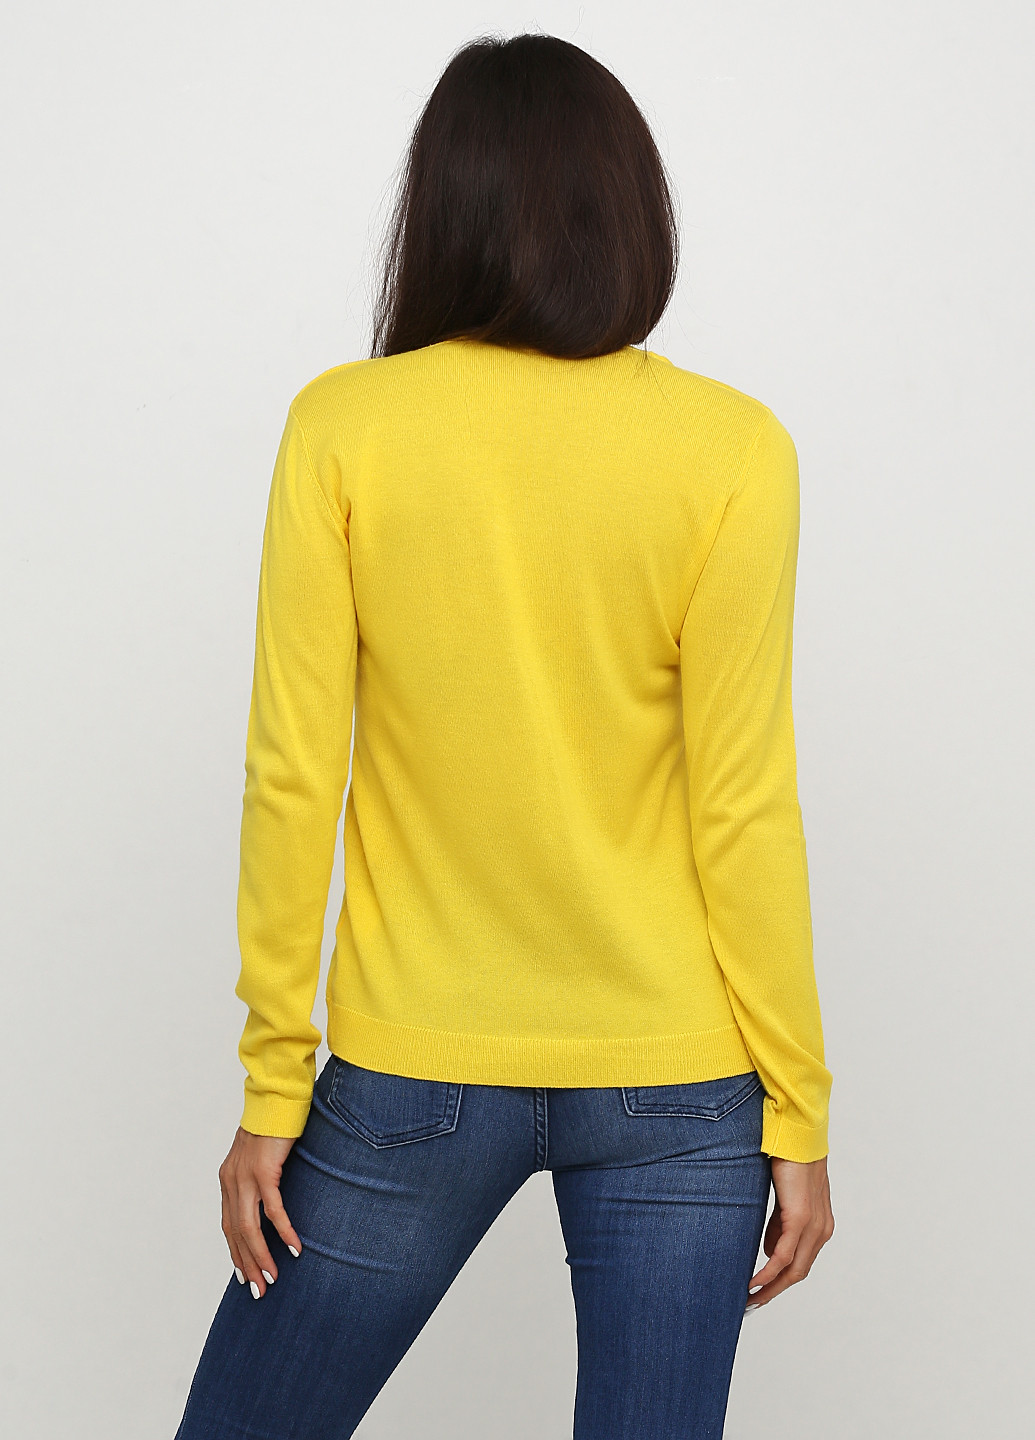 Желтый демисезонный пуловер пуловер Rick Cardona